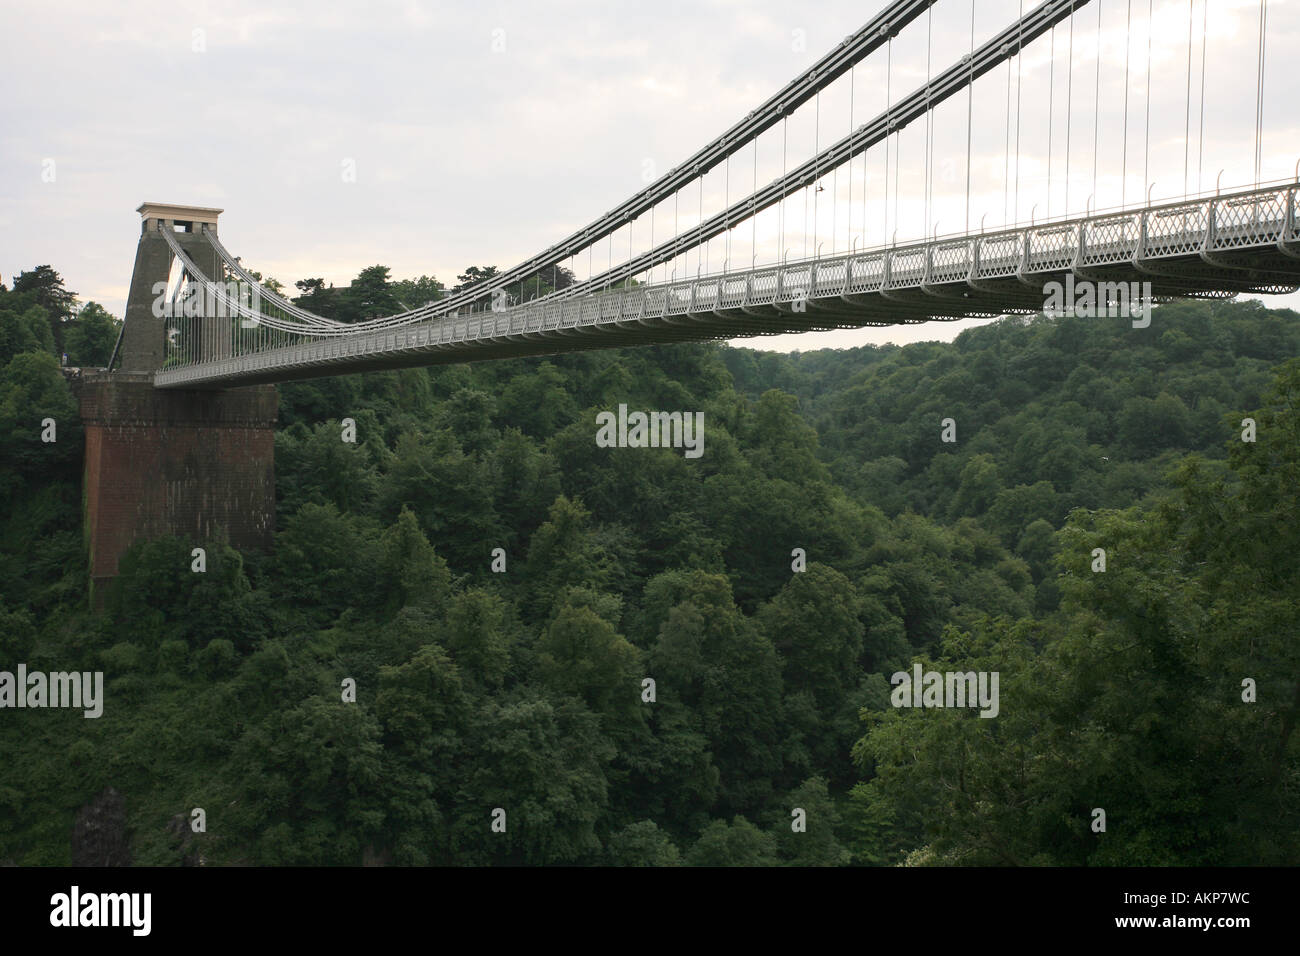 World famous Clifton Suspension Bridge spans the Avon gorge and river Avon in Bristol England UK Britain Europe EU Stock Photo